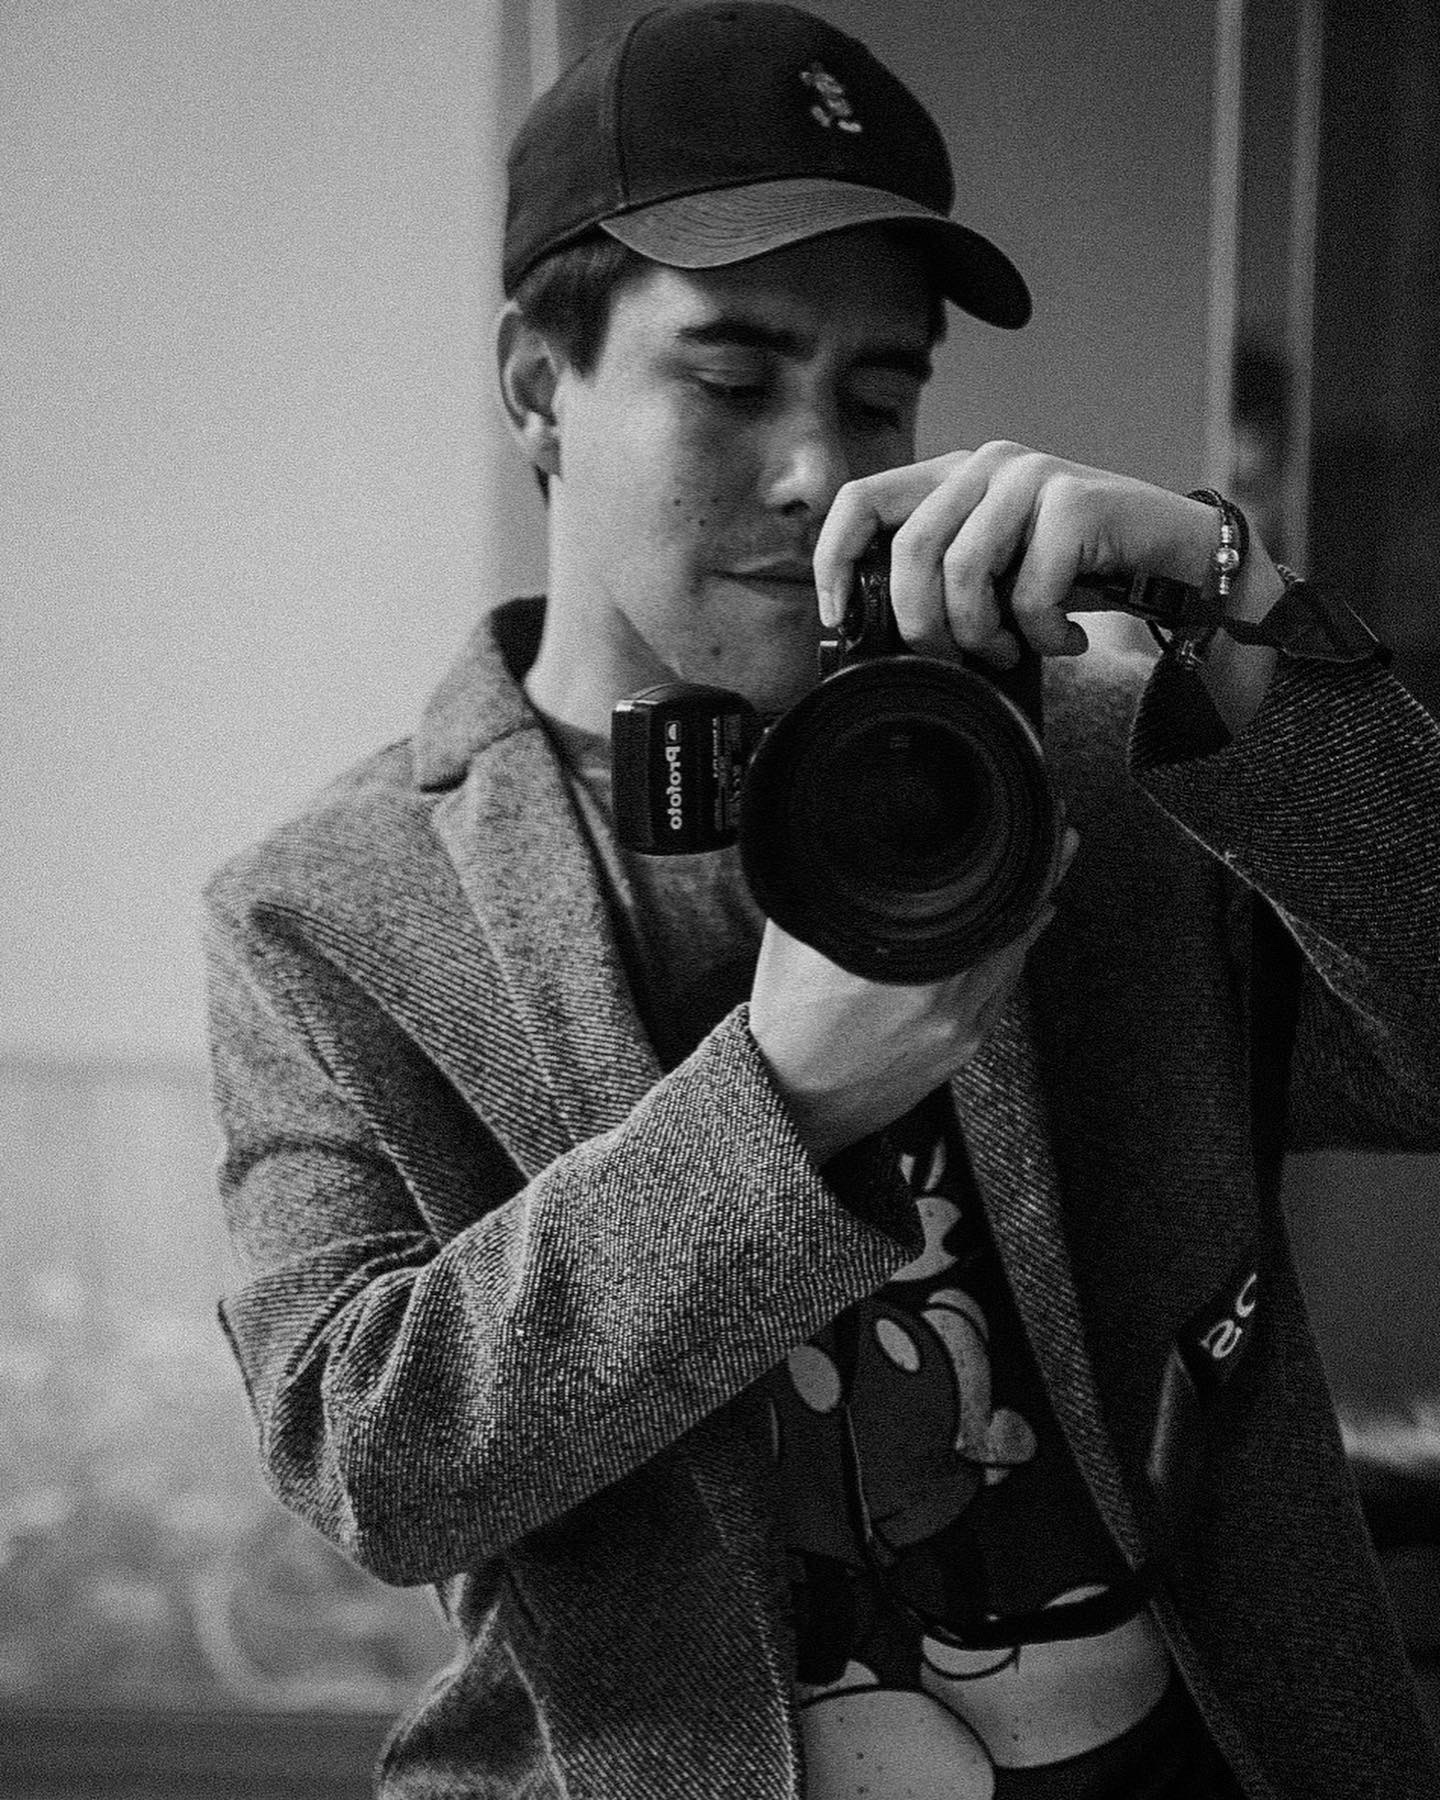 Jóvenes talentos: Matías Montenegro, fotógrafo